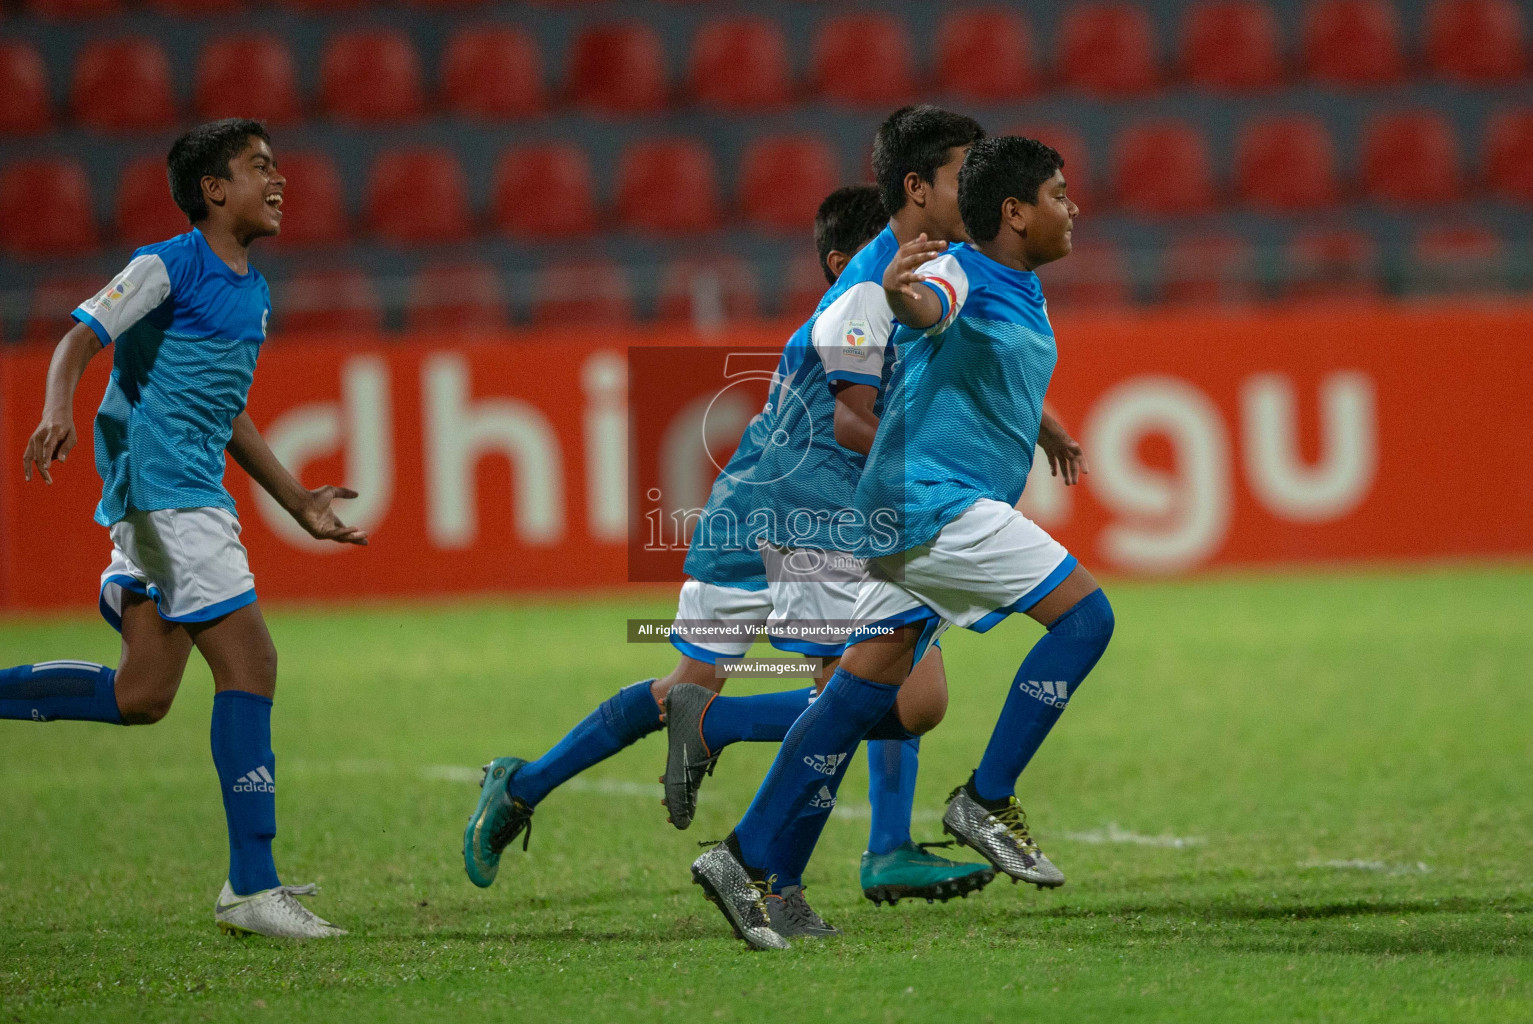 LH.EDU.CENTRE vs Ghaazee School in the finals of MAMEN Inter School Football Tournament 2019 (U13) on 22nd April 2019 in Male', Maldives Photos: Suadh Abdul Sattar / Images.mv